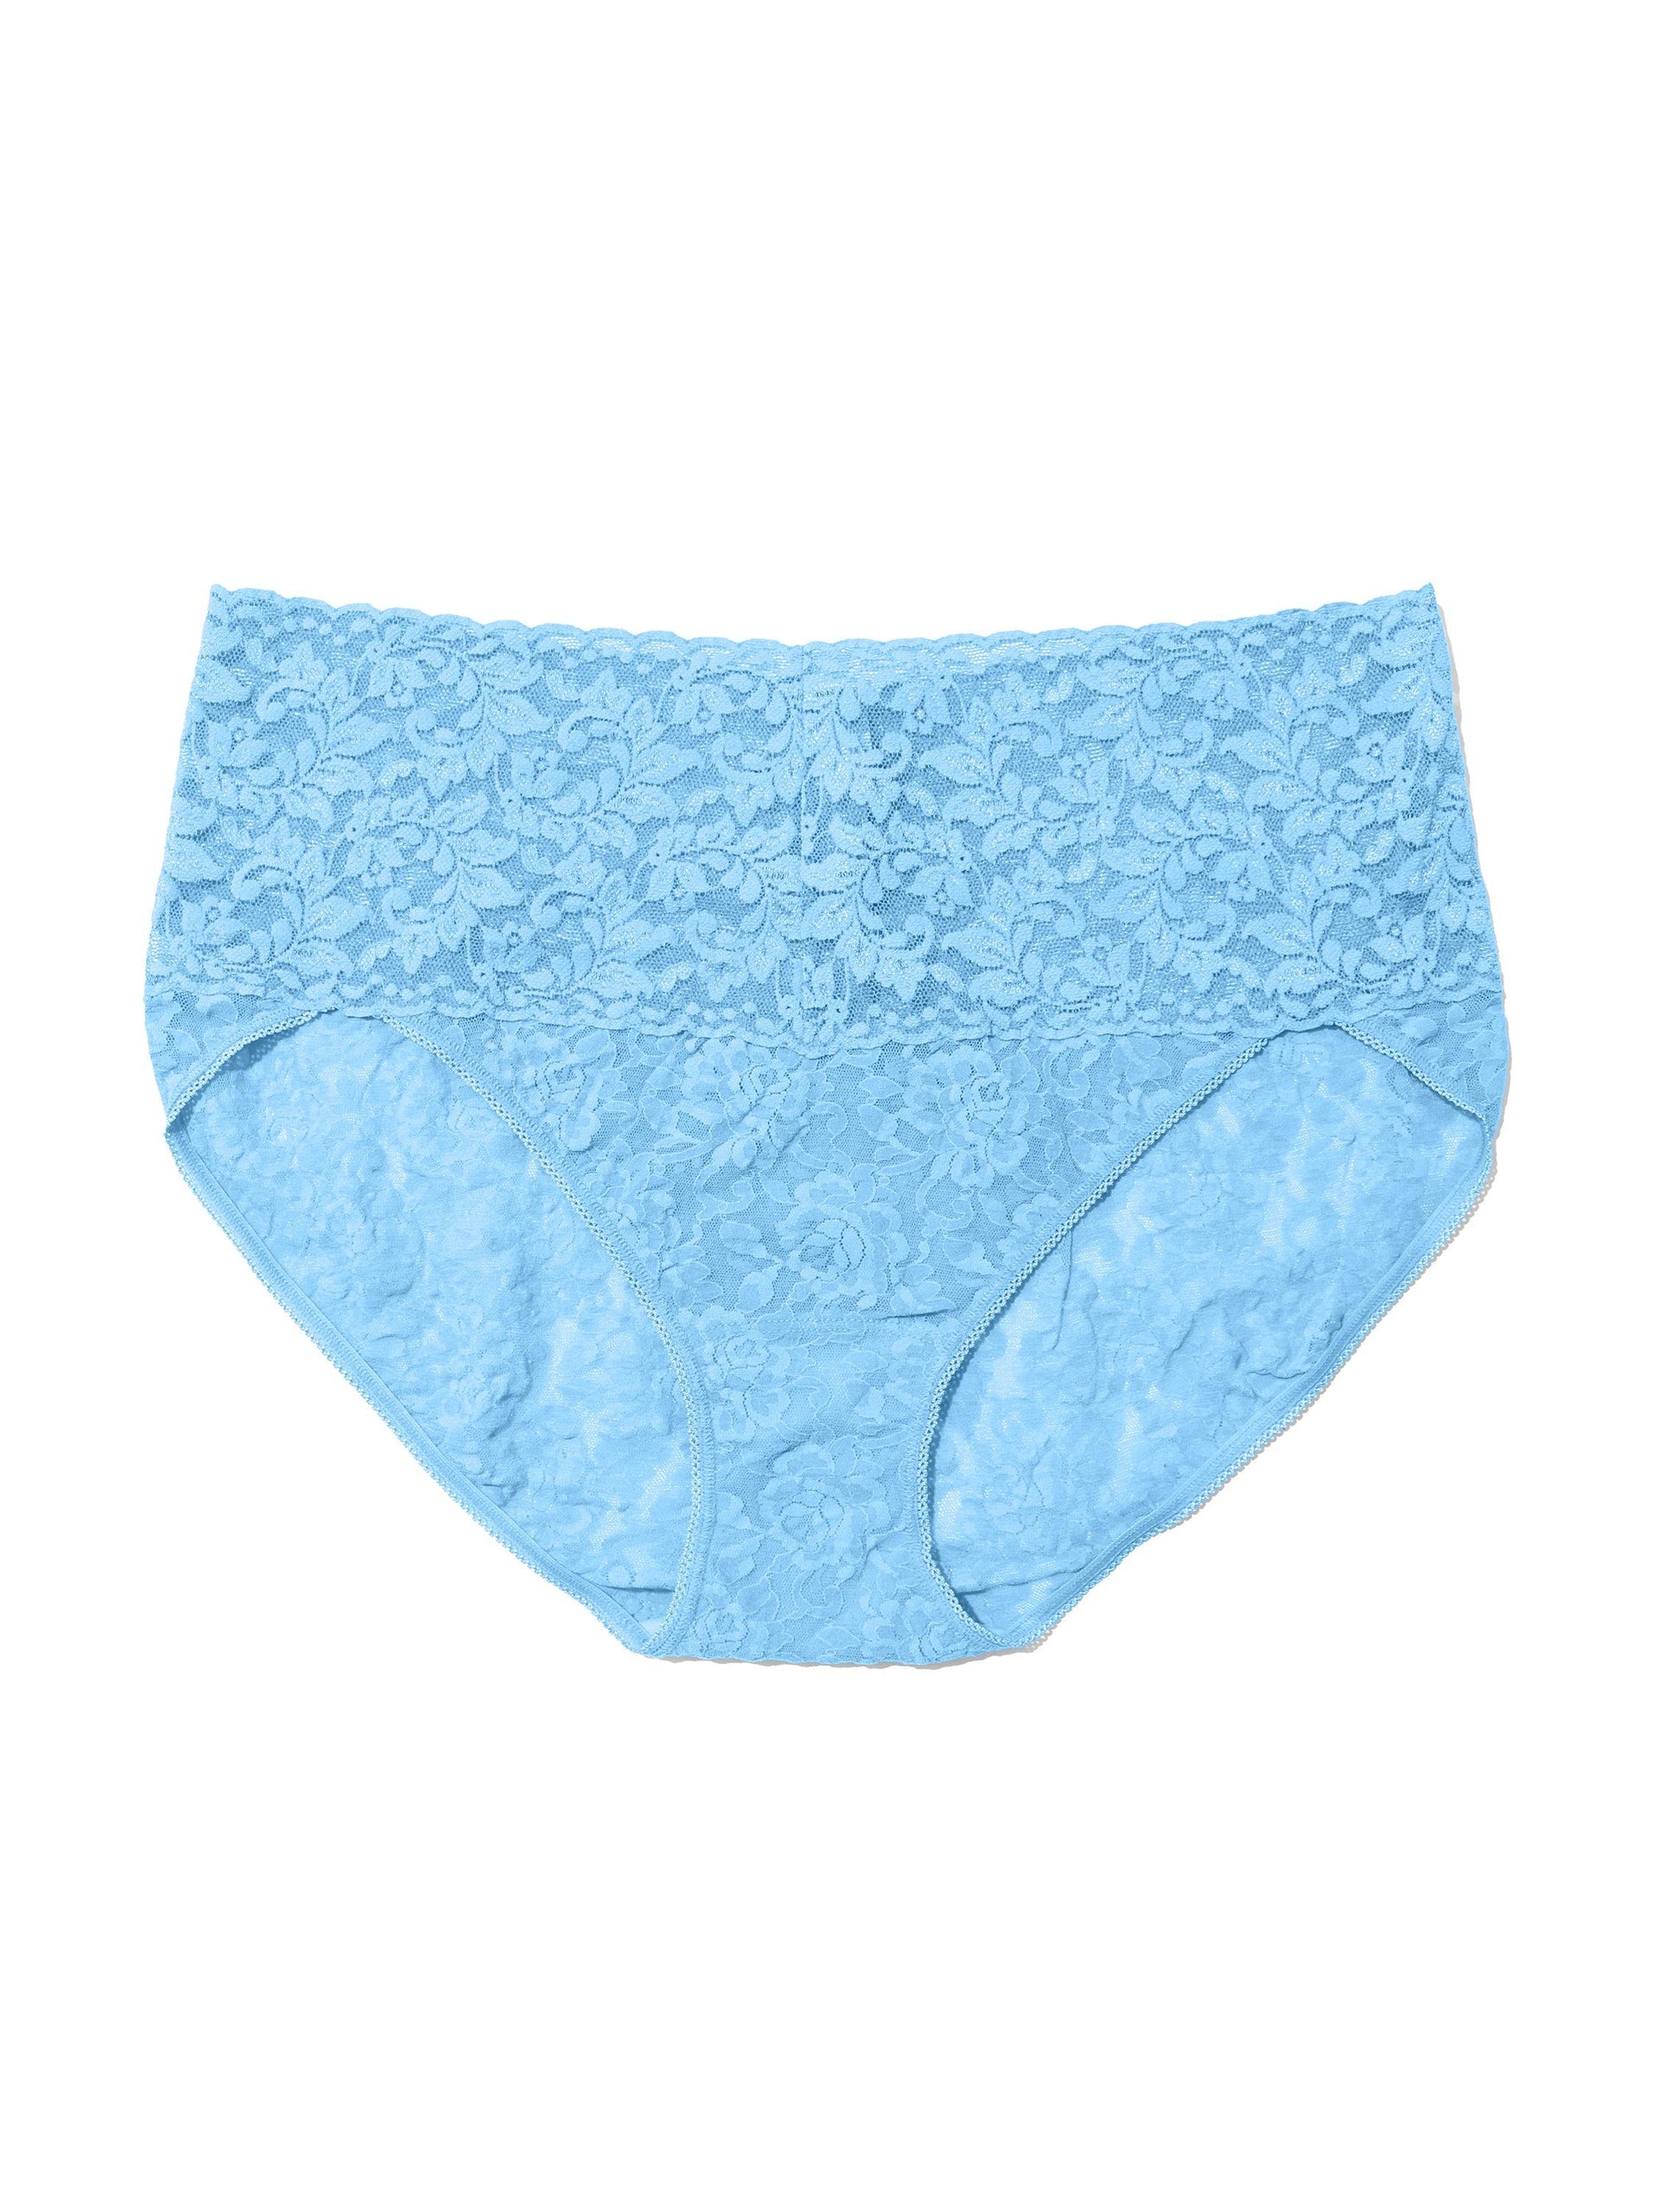 Plus Size Retro Lace V-kini Partly Cloudy Blue | Hanky Panky